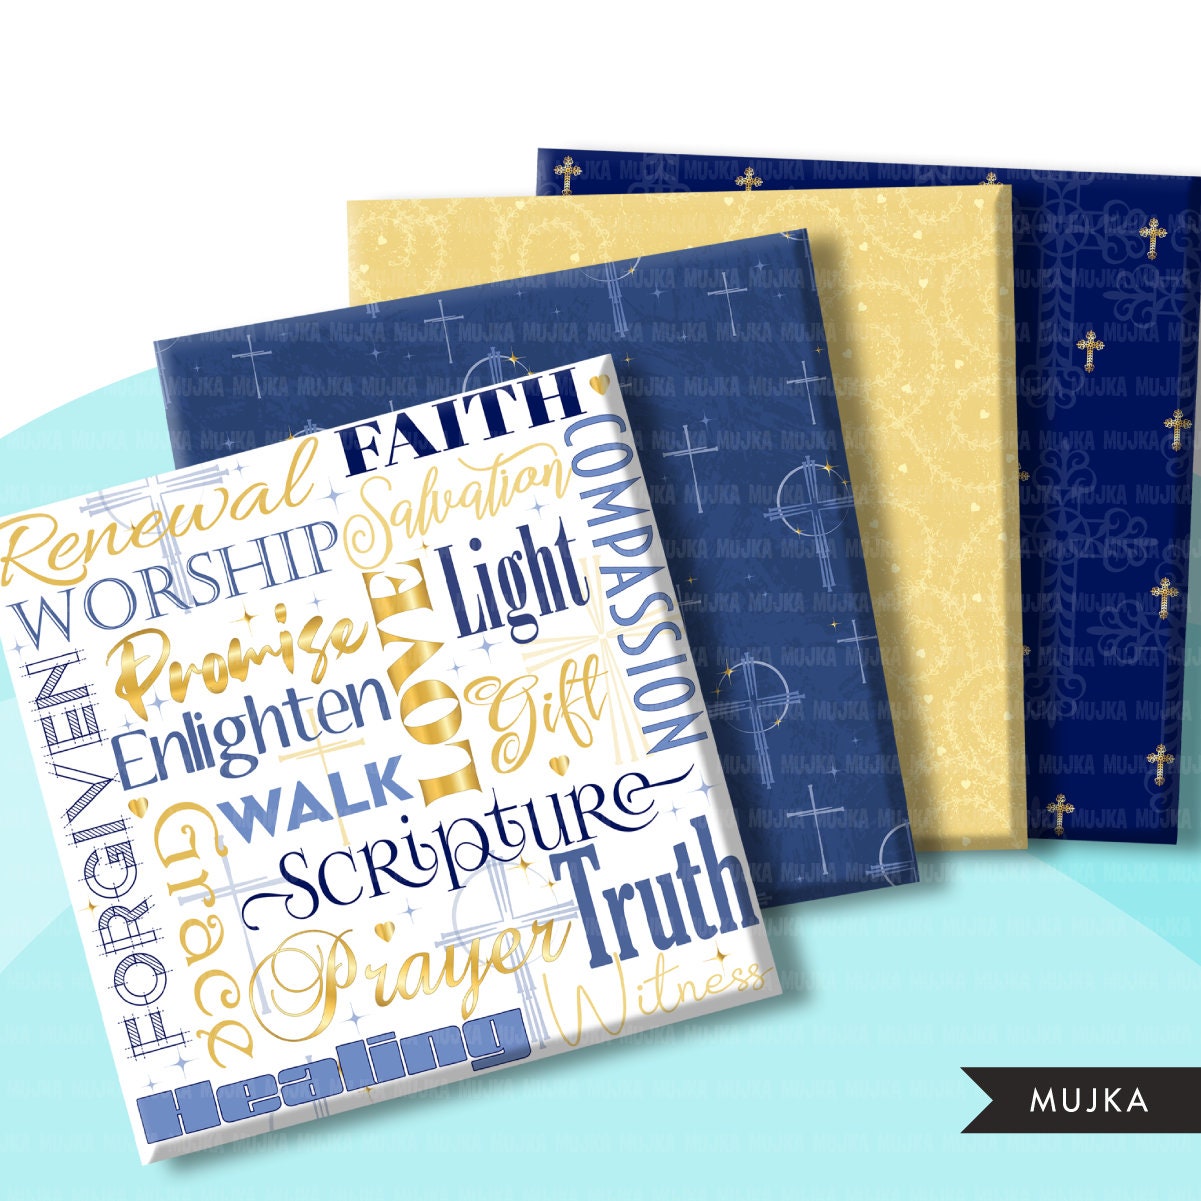 Christian Stickers, Clip Art, Print and Cut,Bible Journaling